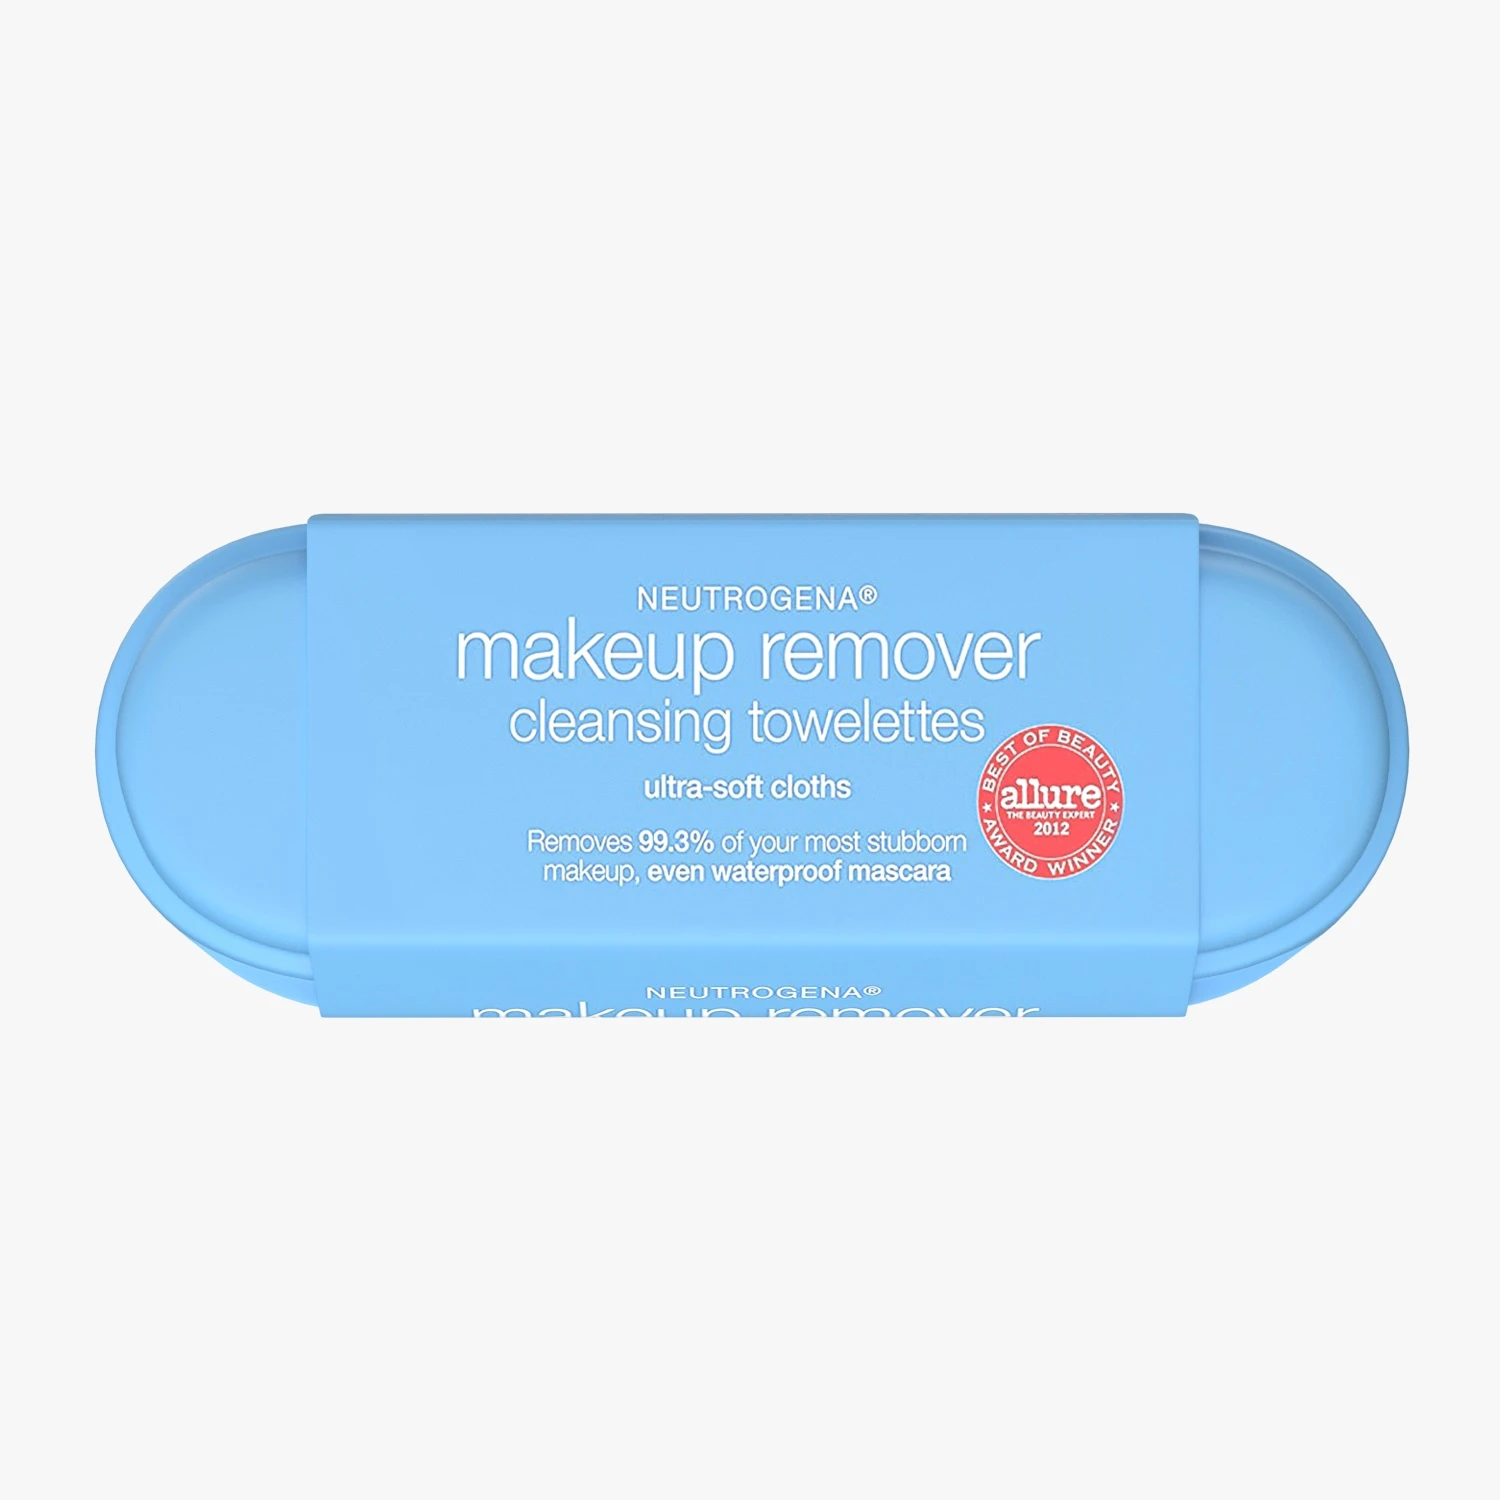 Neutrogena Makeup Remover Facial Cleansing Towelettes 3D Model_04